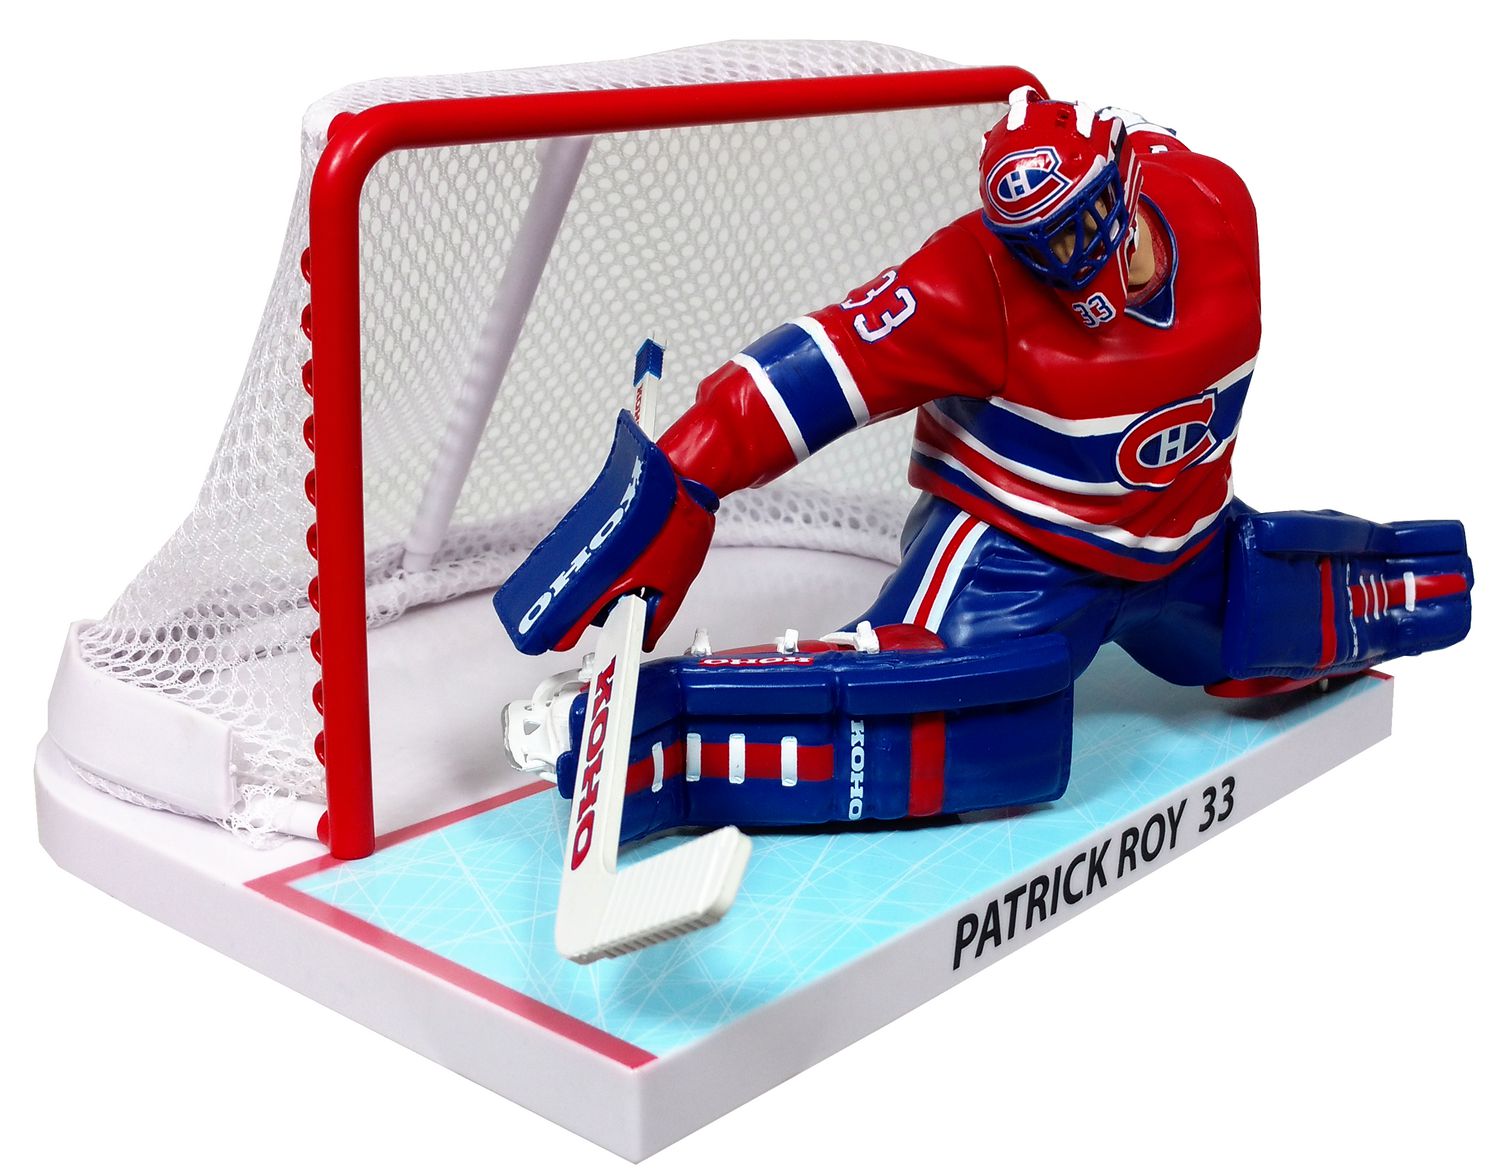 Canadian Hockey League Legends Edition !! FanPlastic Patrick Roy 33 Montreal Canadiens Wall Clock